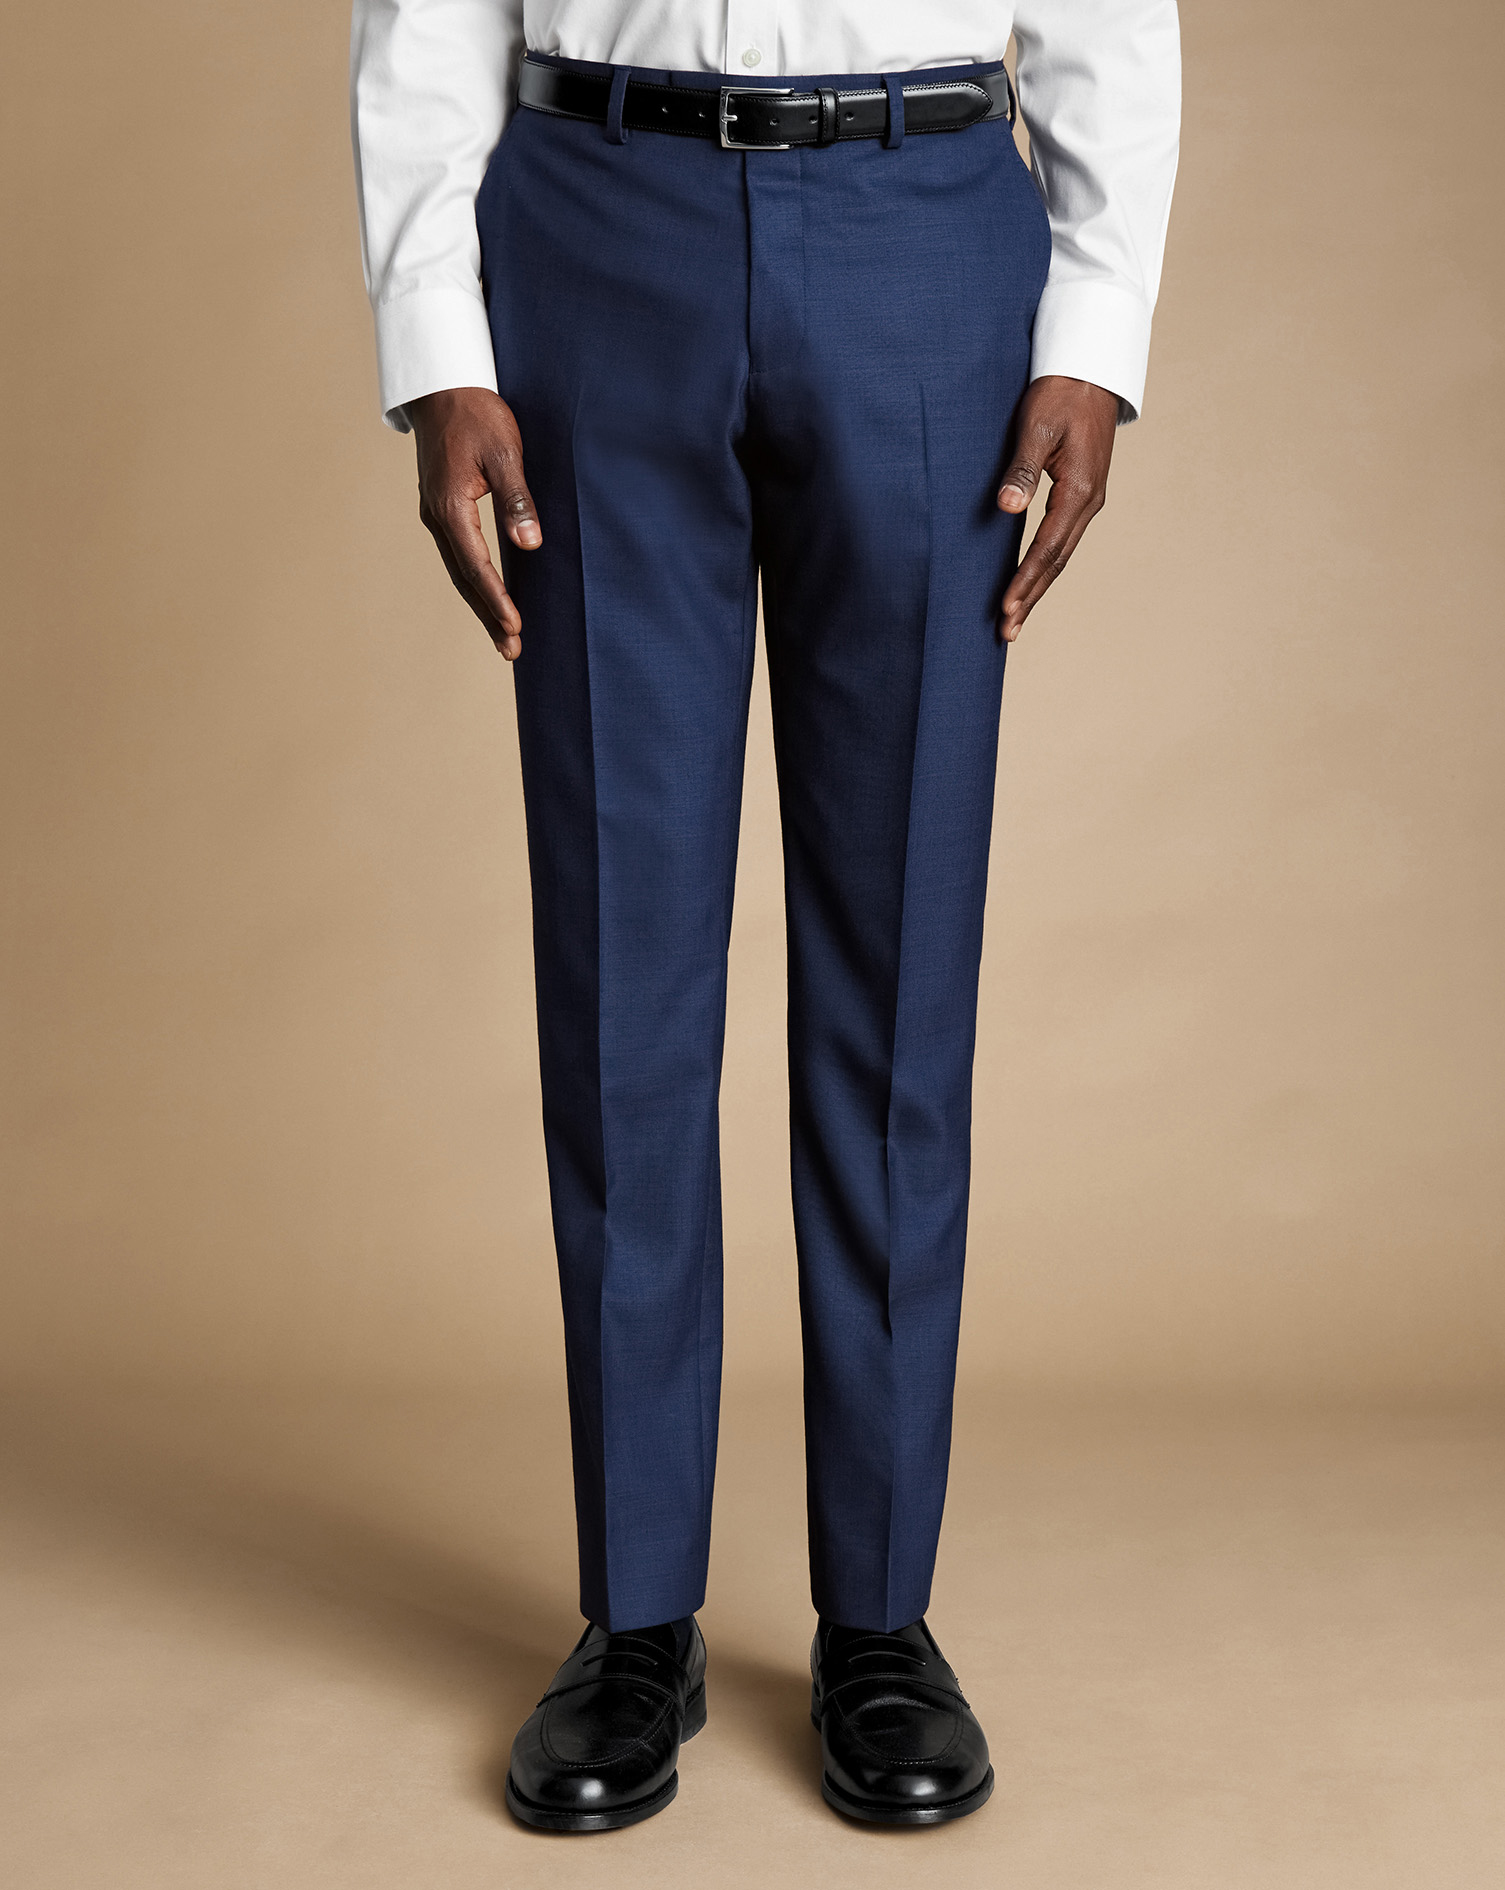 Men's Charles Tyrwhitt Ultimate Performance Sharkskin Suit Trousers - Ink Blue Size 38/32
